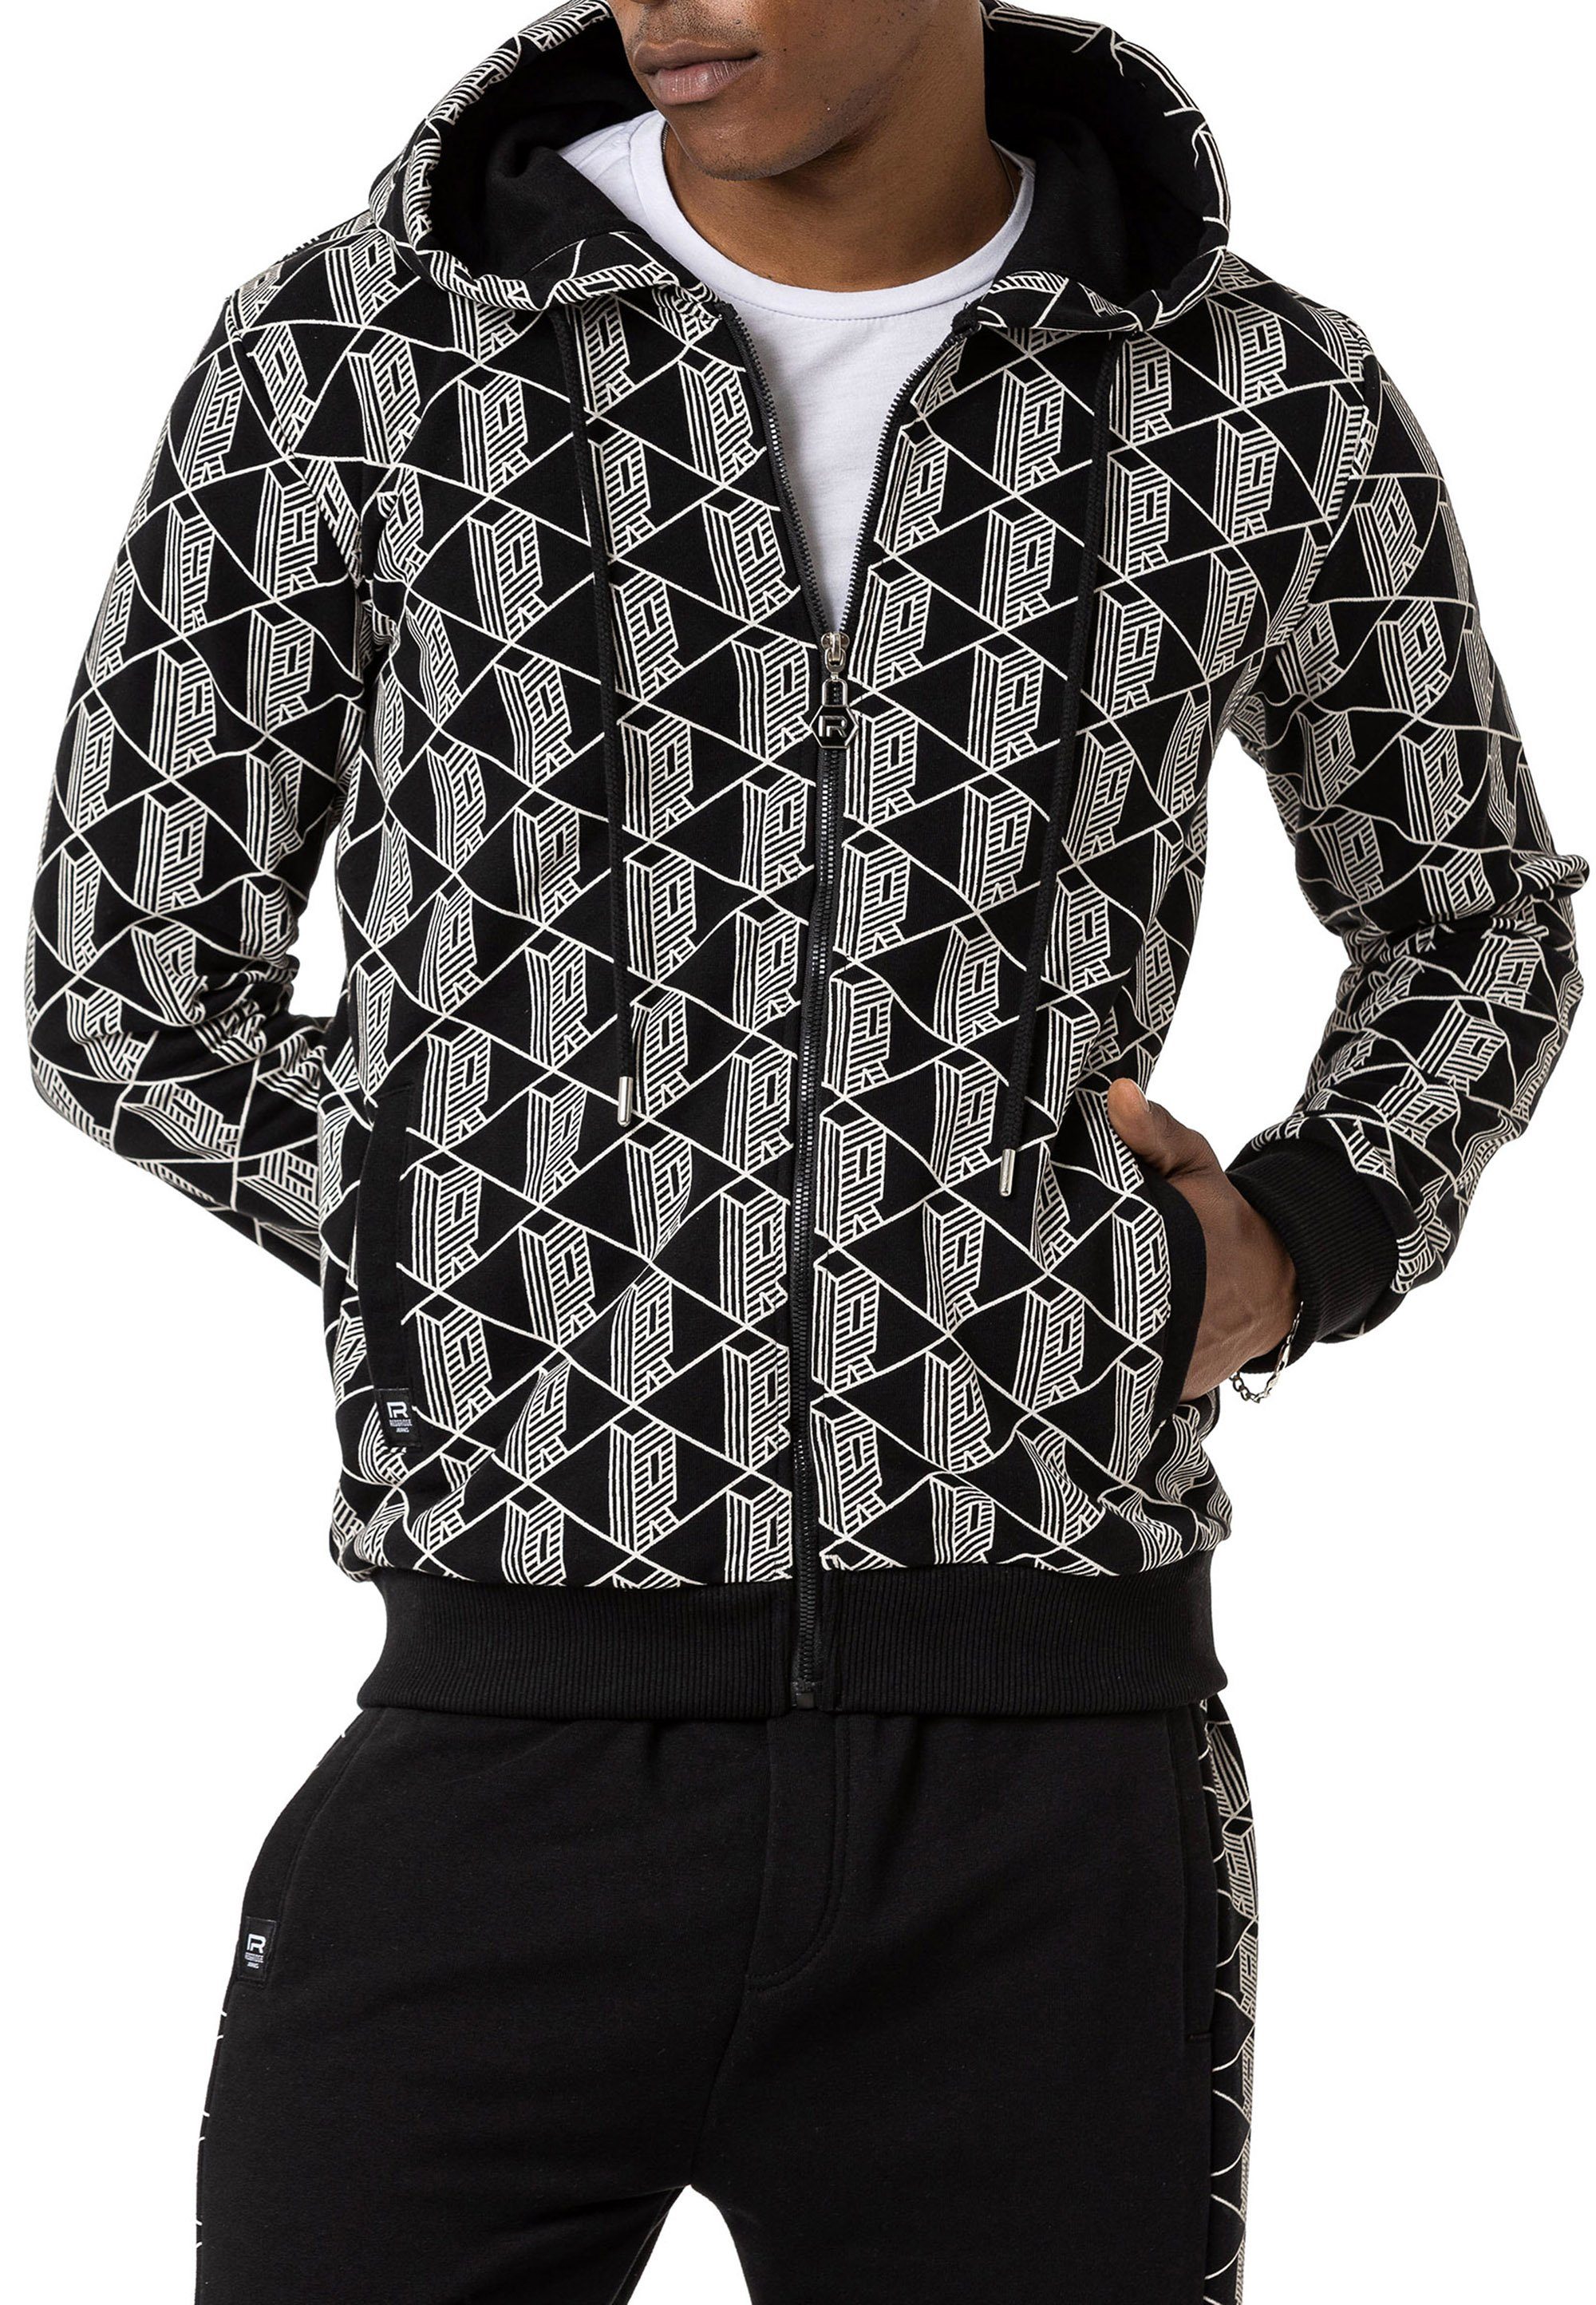 RedBridge Kapuzensweatjacke Sweater mit Kapuze 3D Allover-Print Premium Qualität Schwarz